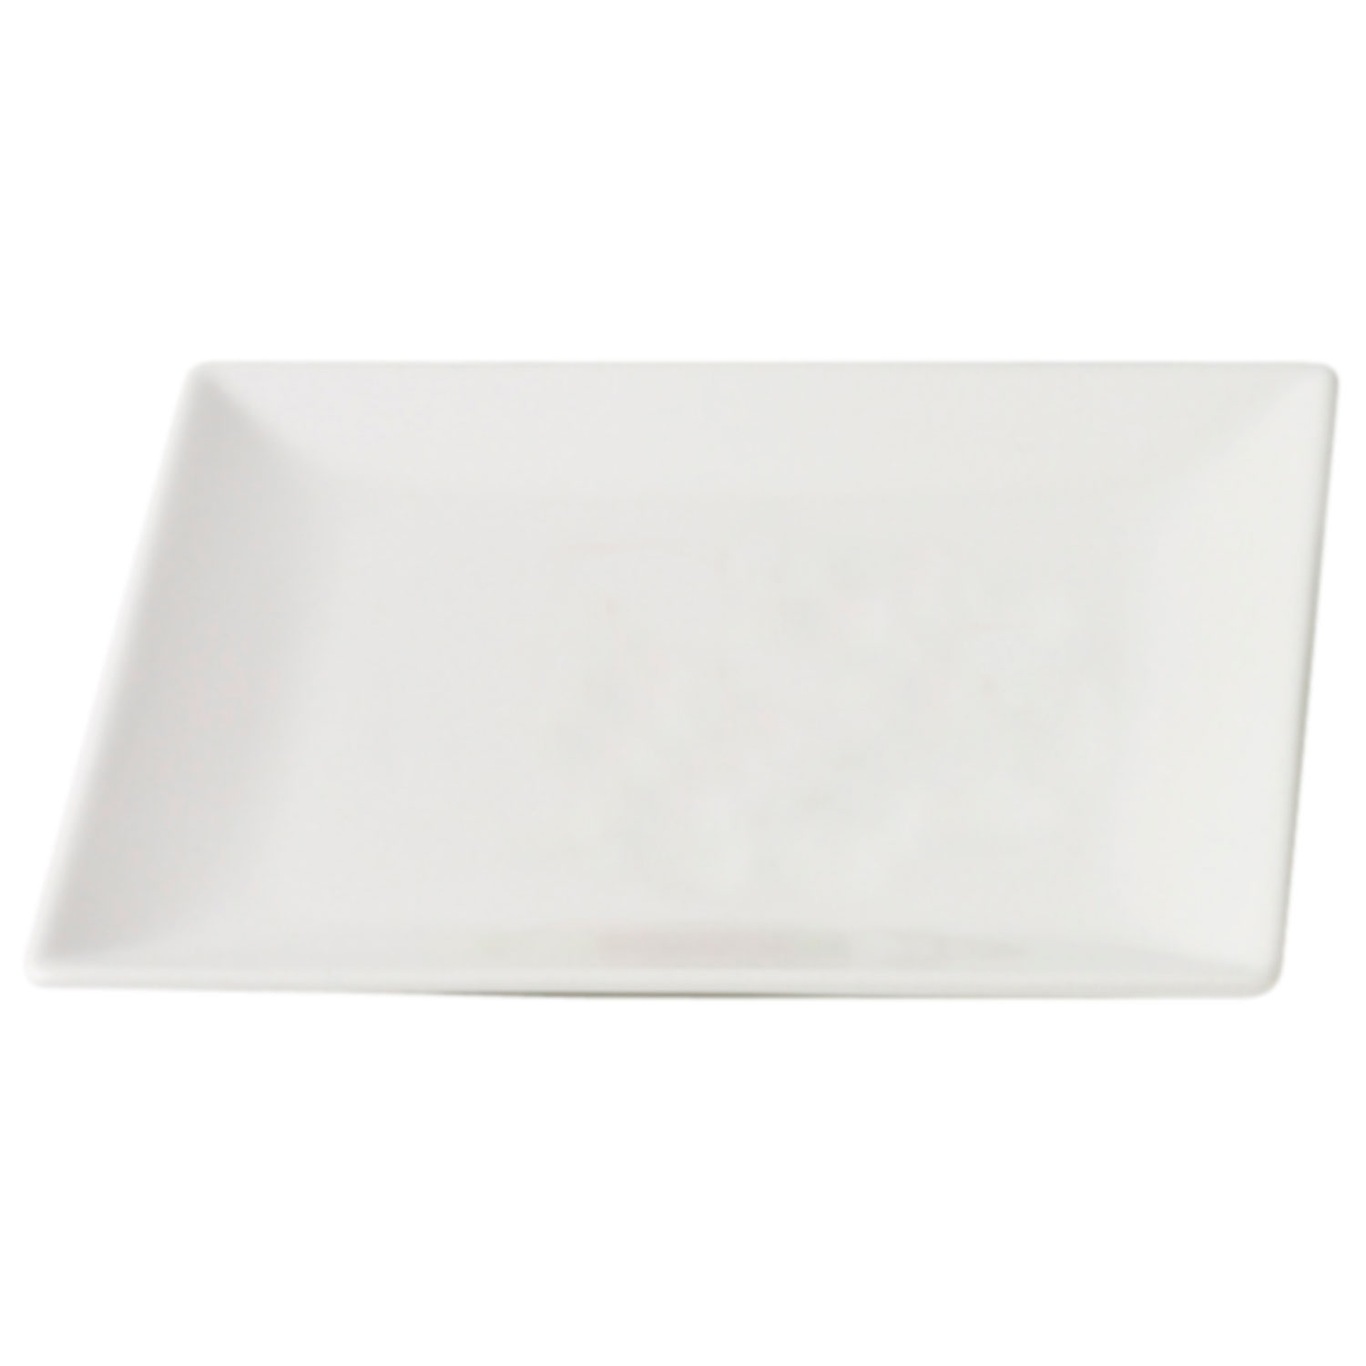 Quadro Plate 18x18 cm, White